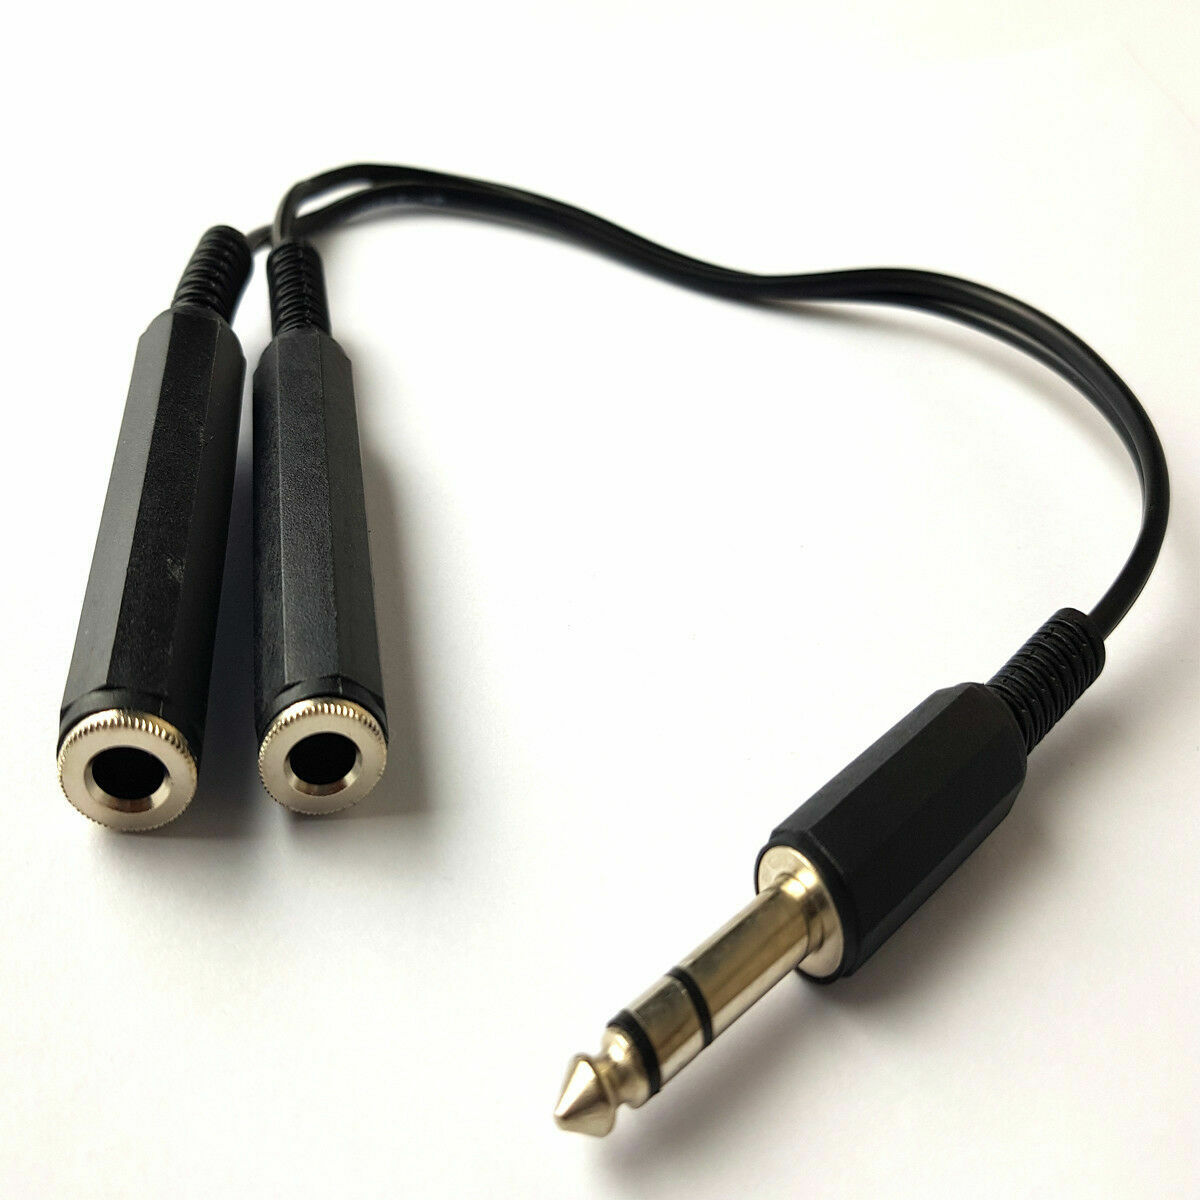 635mm-Stereo-Splitter-Cable-14-Plug-To-2-x-Jack-Socket-Headphone-Adapter-253973185634.jpg